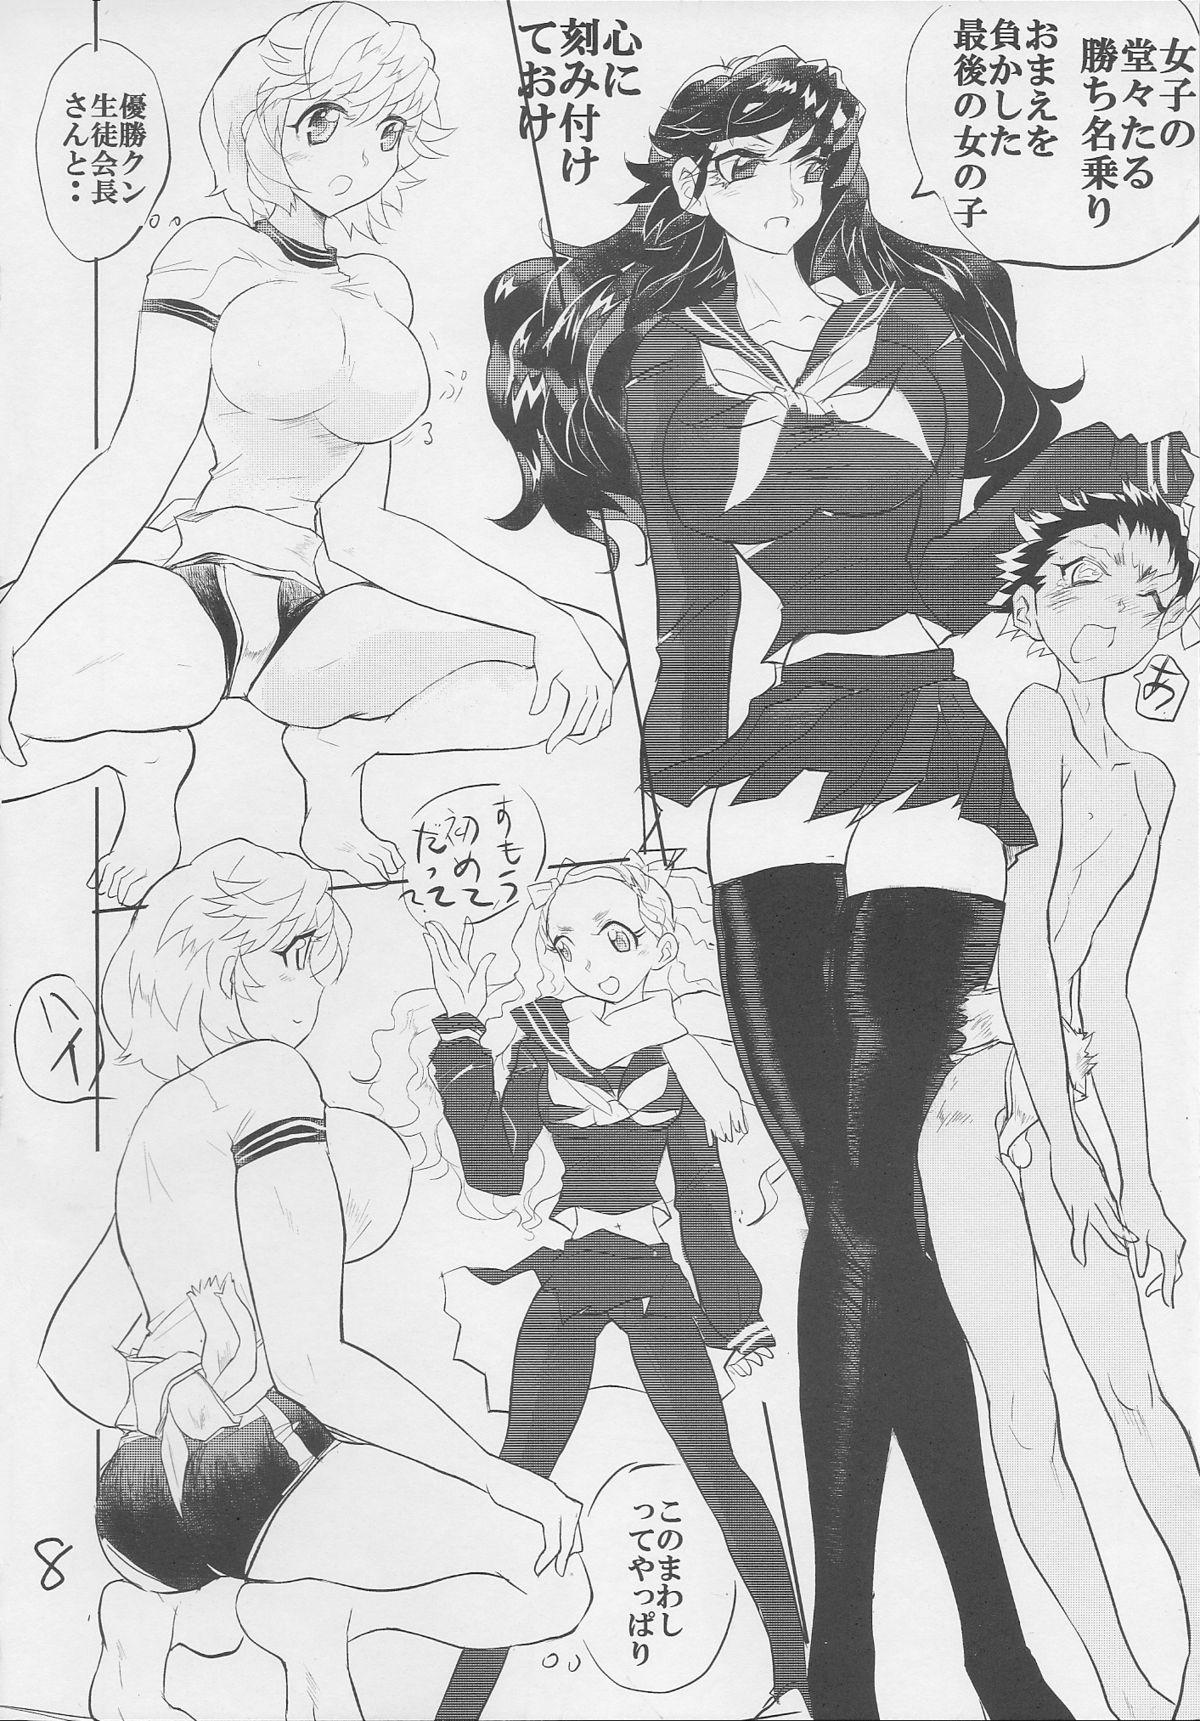 Spy Otoko no Tatakai 16 Naked Women Fucking - Page 8